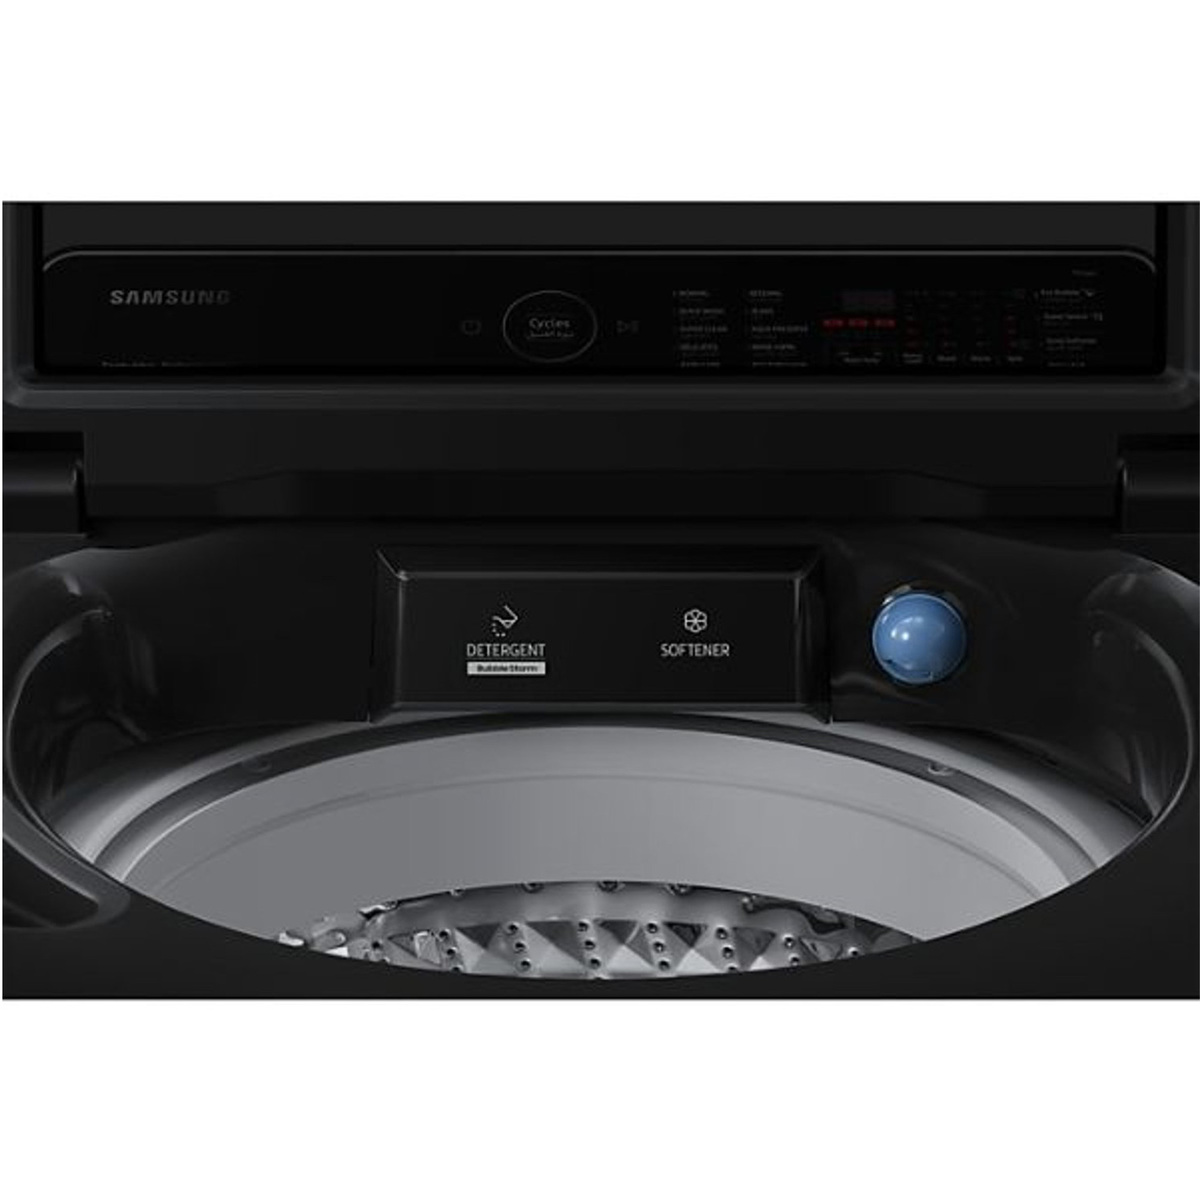 Samsung Top Load Washing Machine, 10 Kg, Black, WA10CG5745BVGU